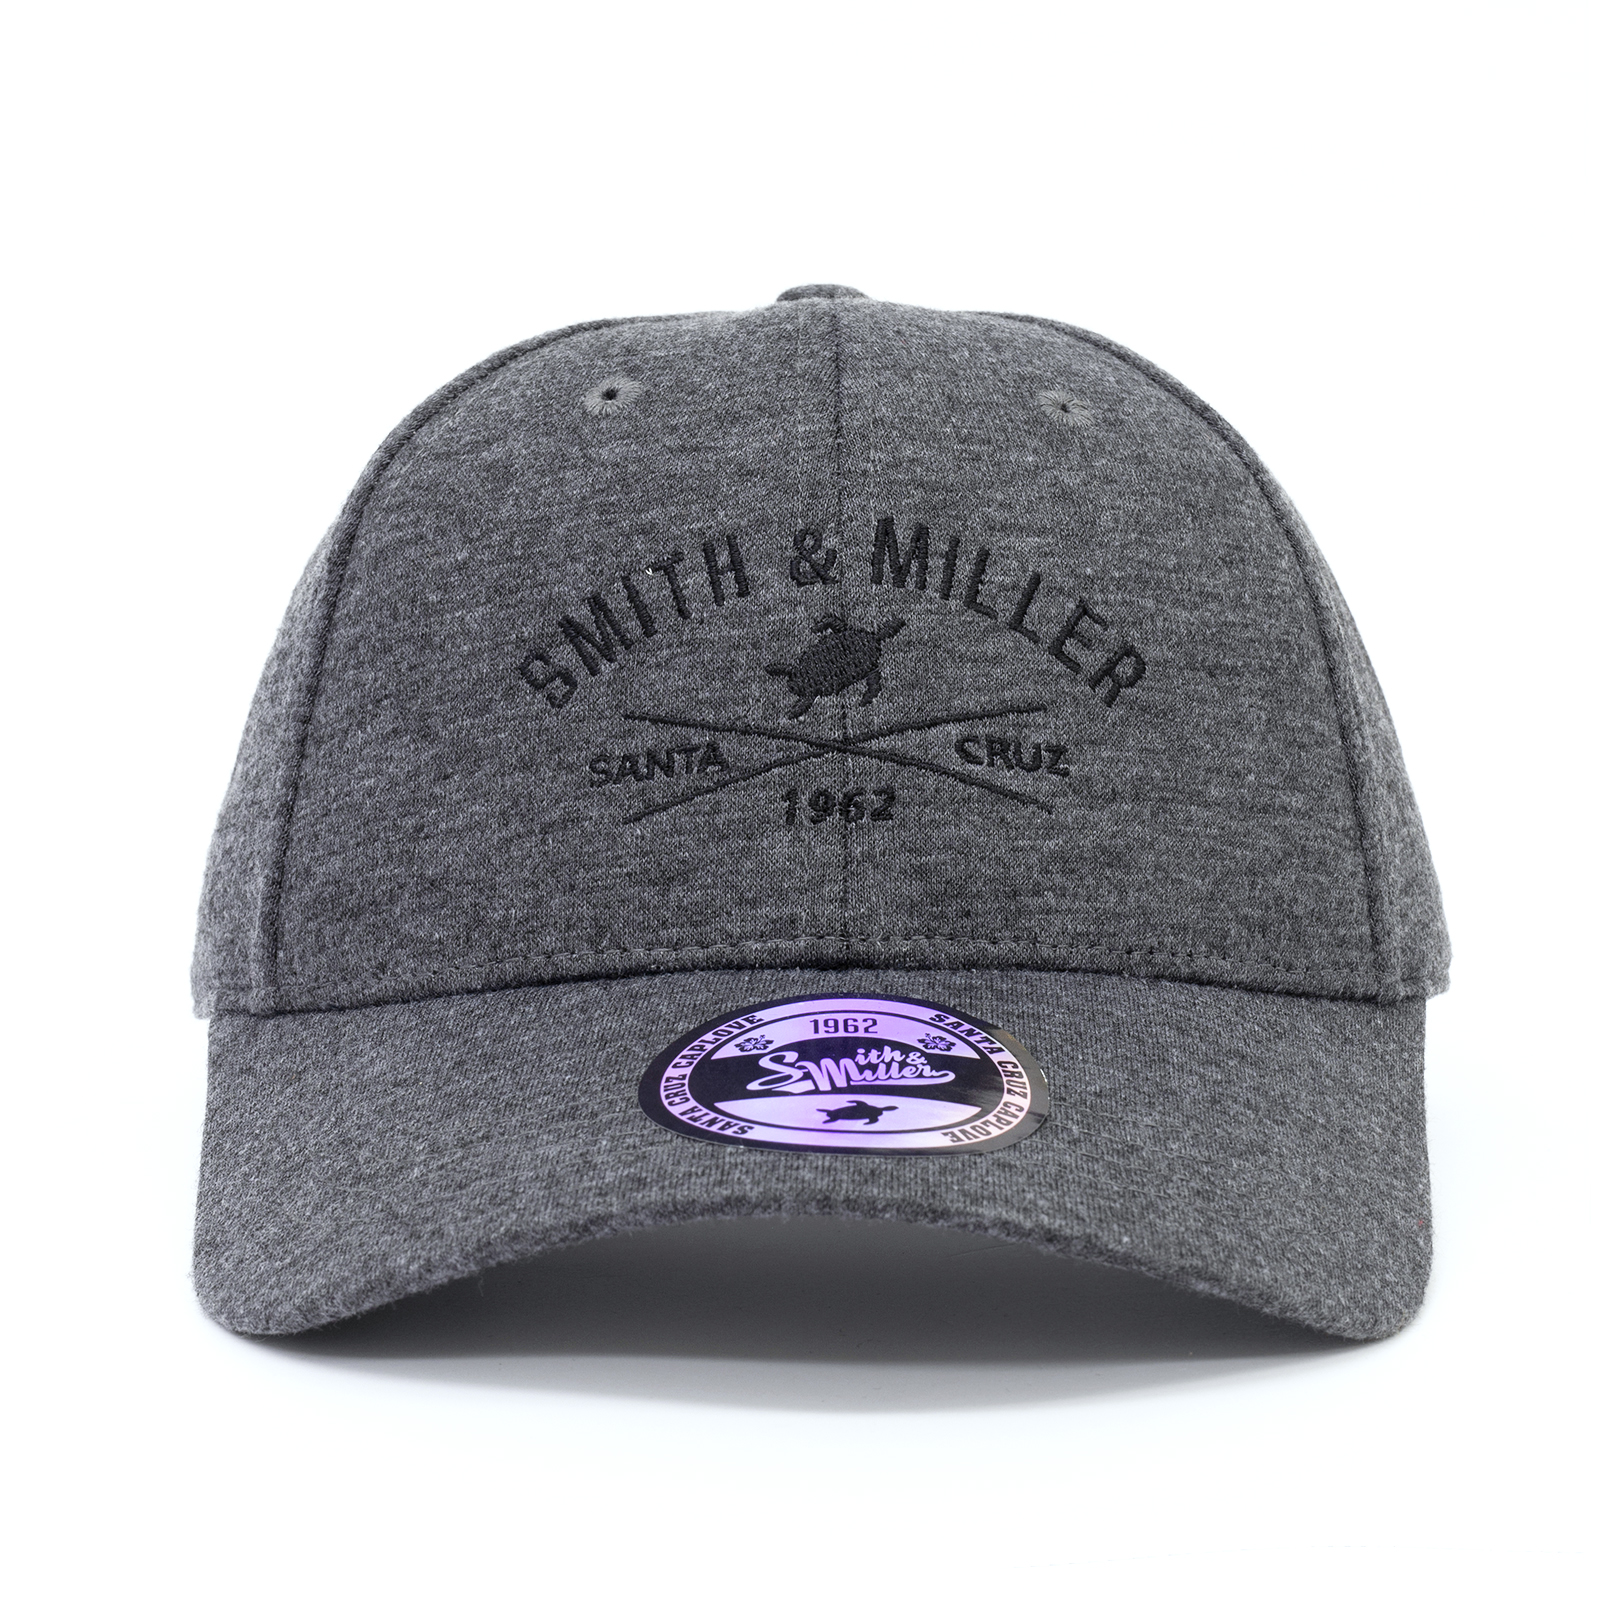 Smith & Miller Pico Arcata Unisex Curved Cap, heather black